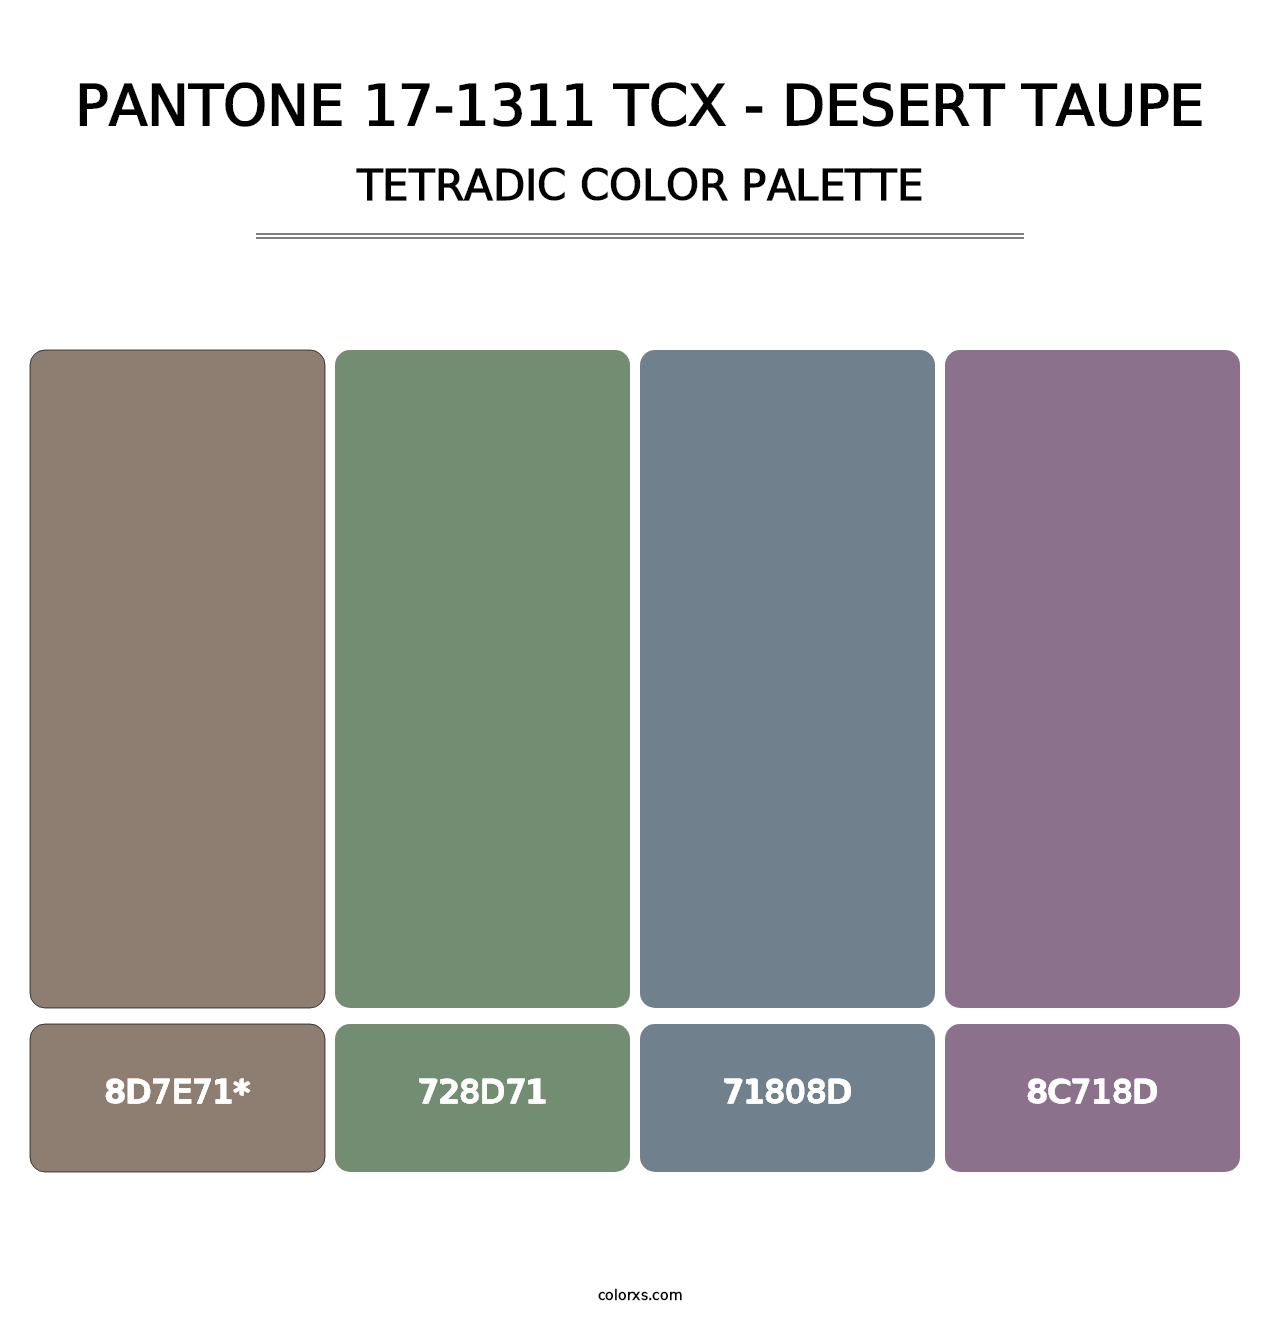 PANTONE 17-1311 TCX - Desert Taupe - Tetradic Color Palette